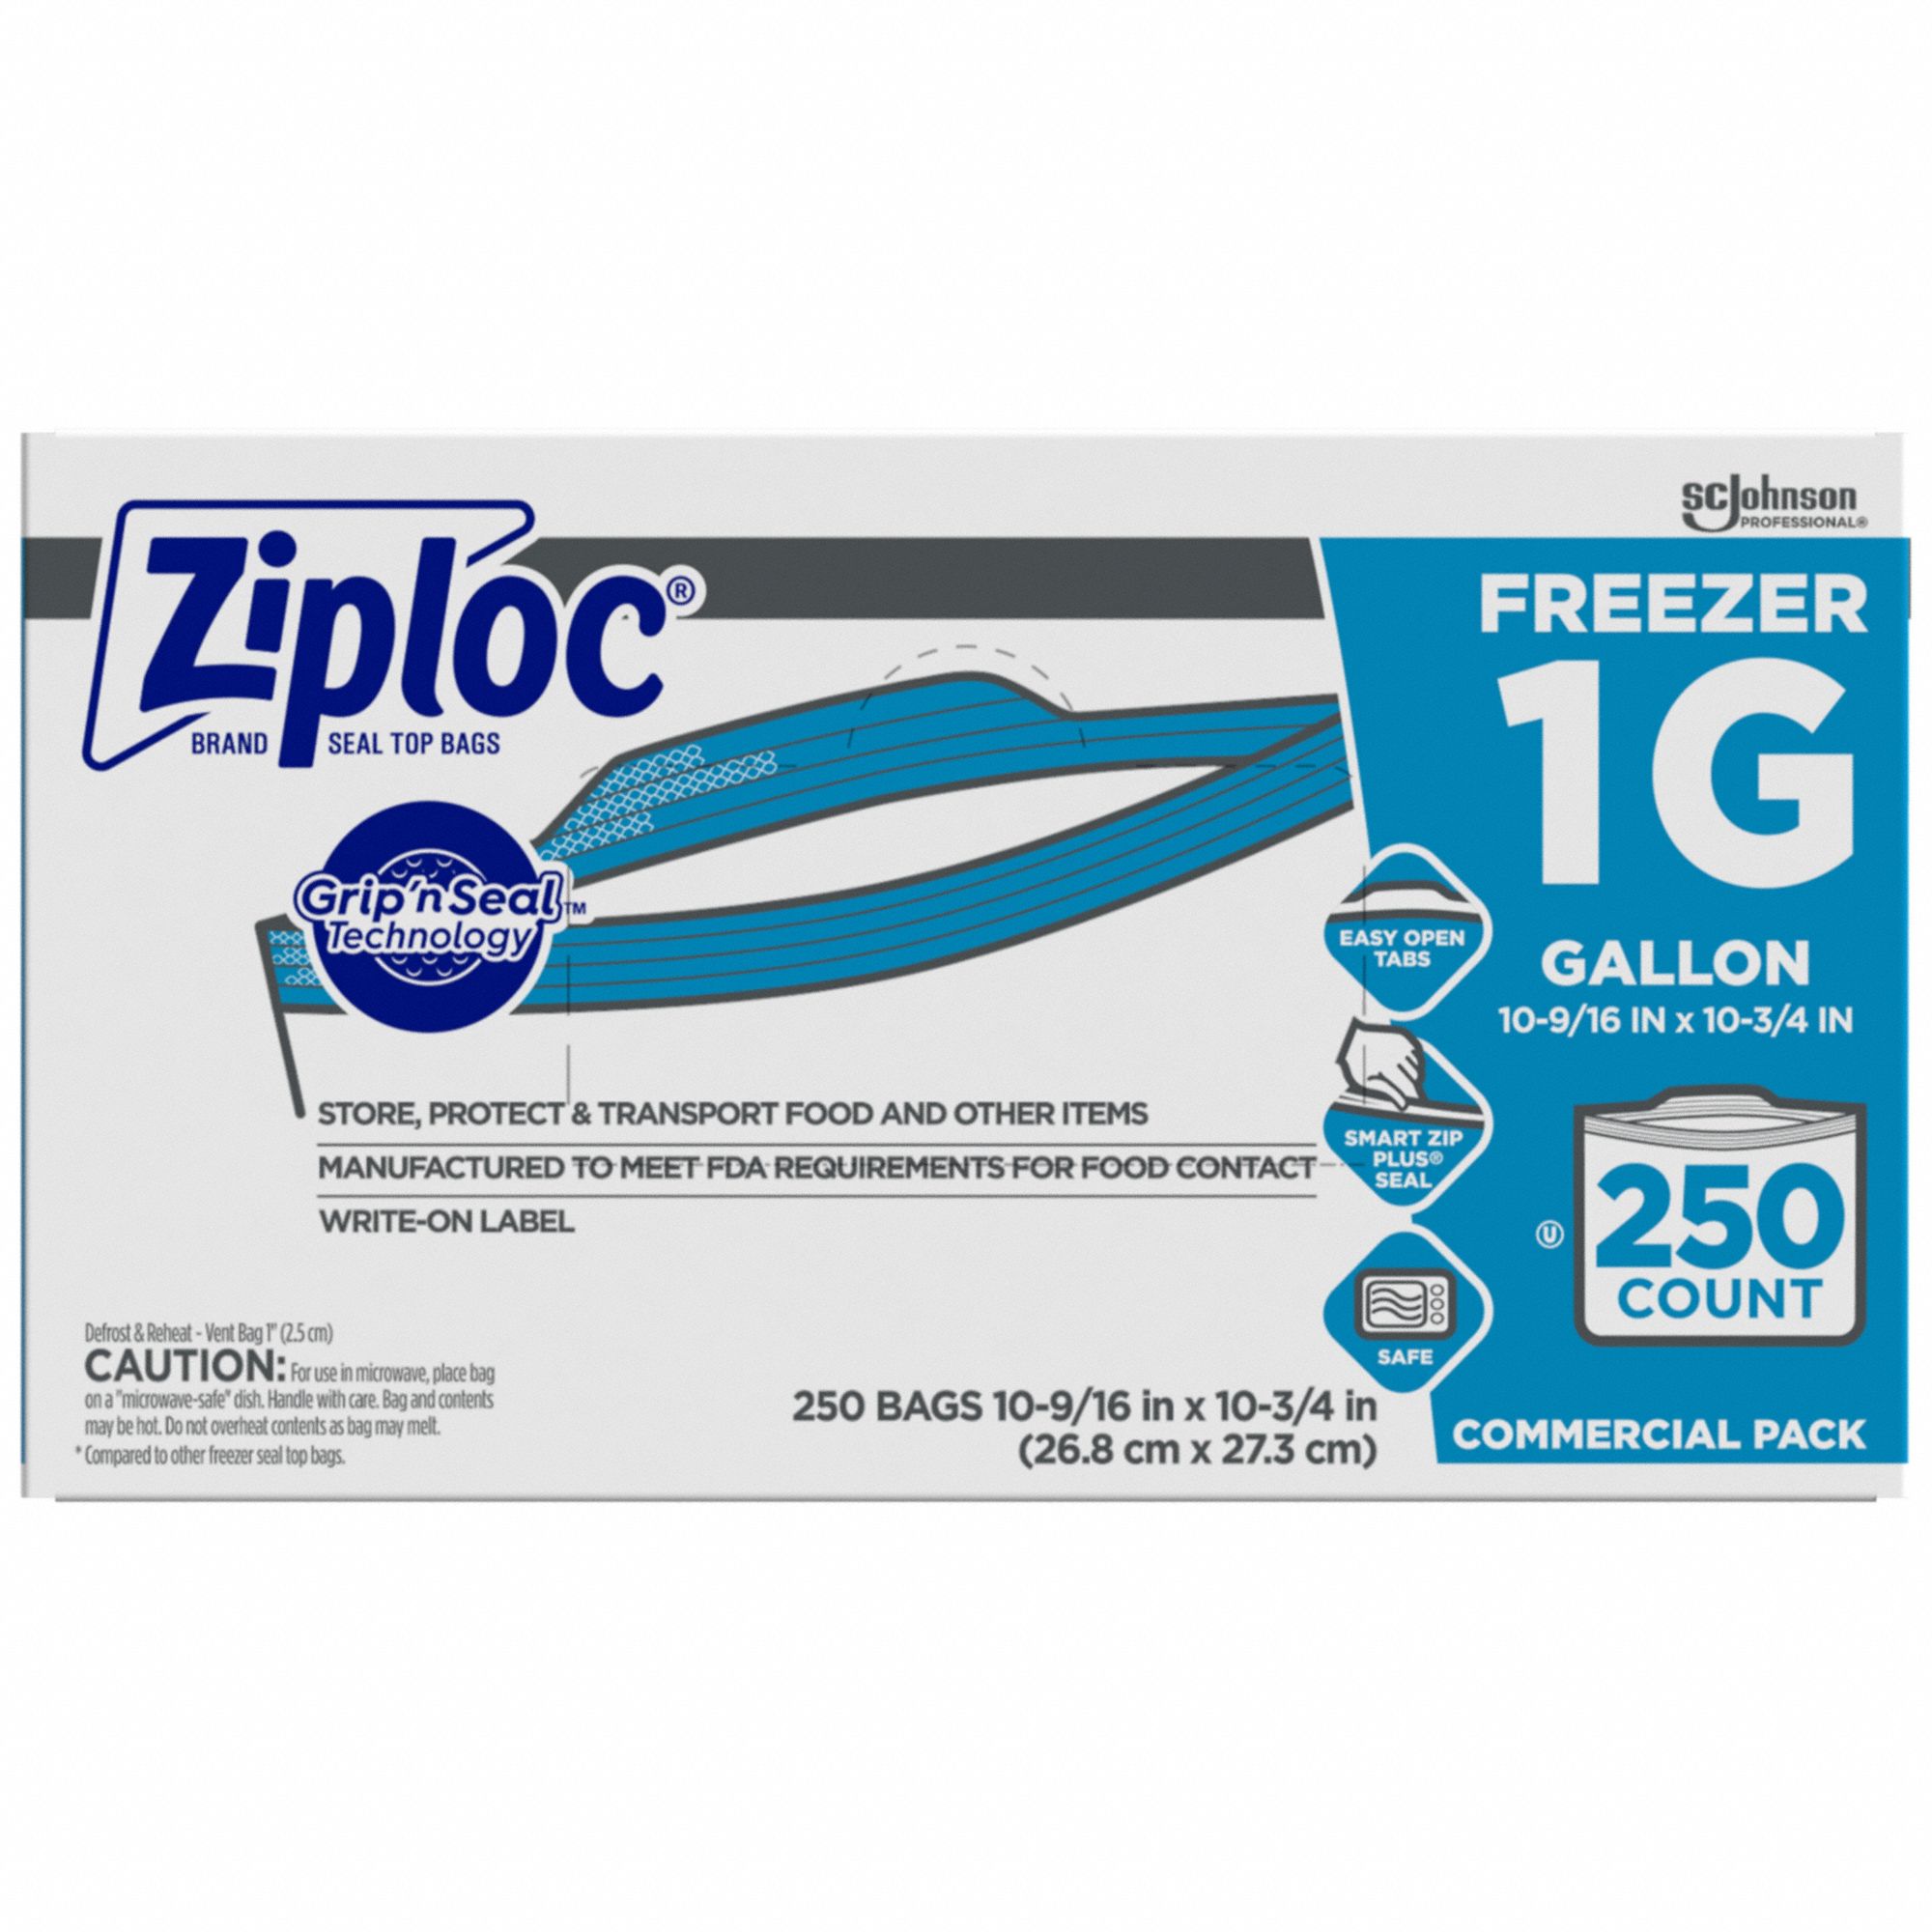 Ziploc Pint Freezer Bags, Grip 'n Seal Technology, Clear, 20 Count